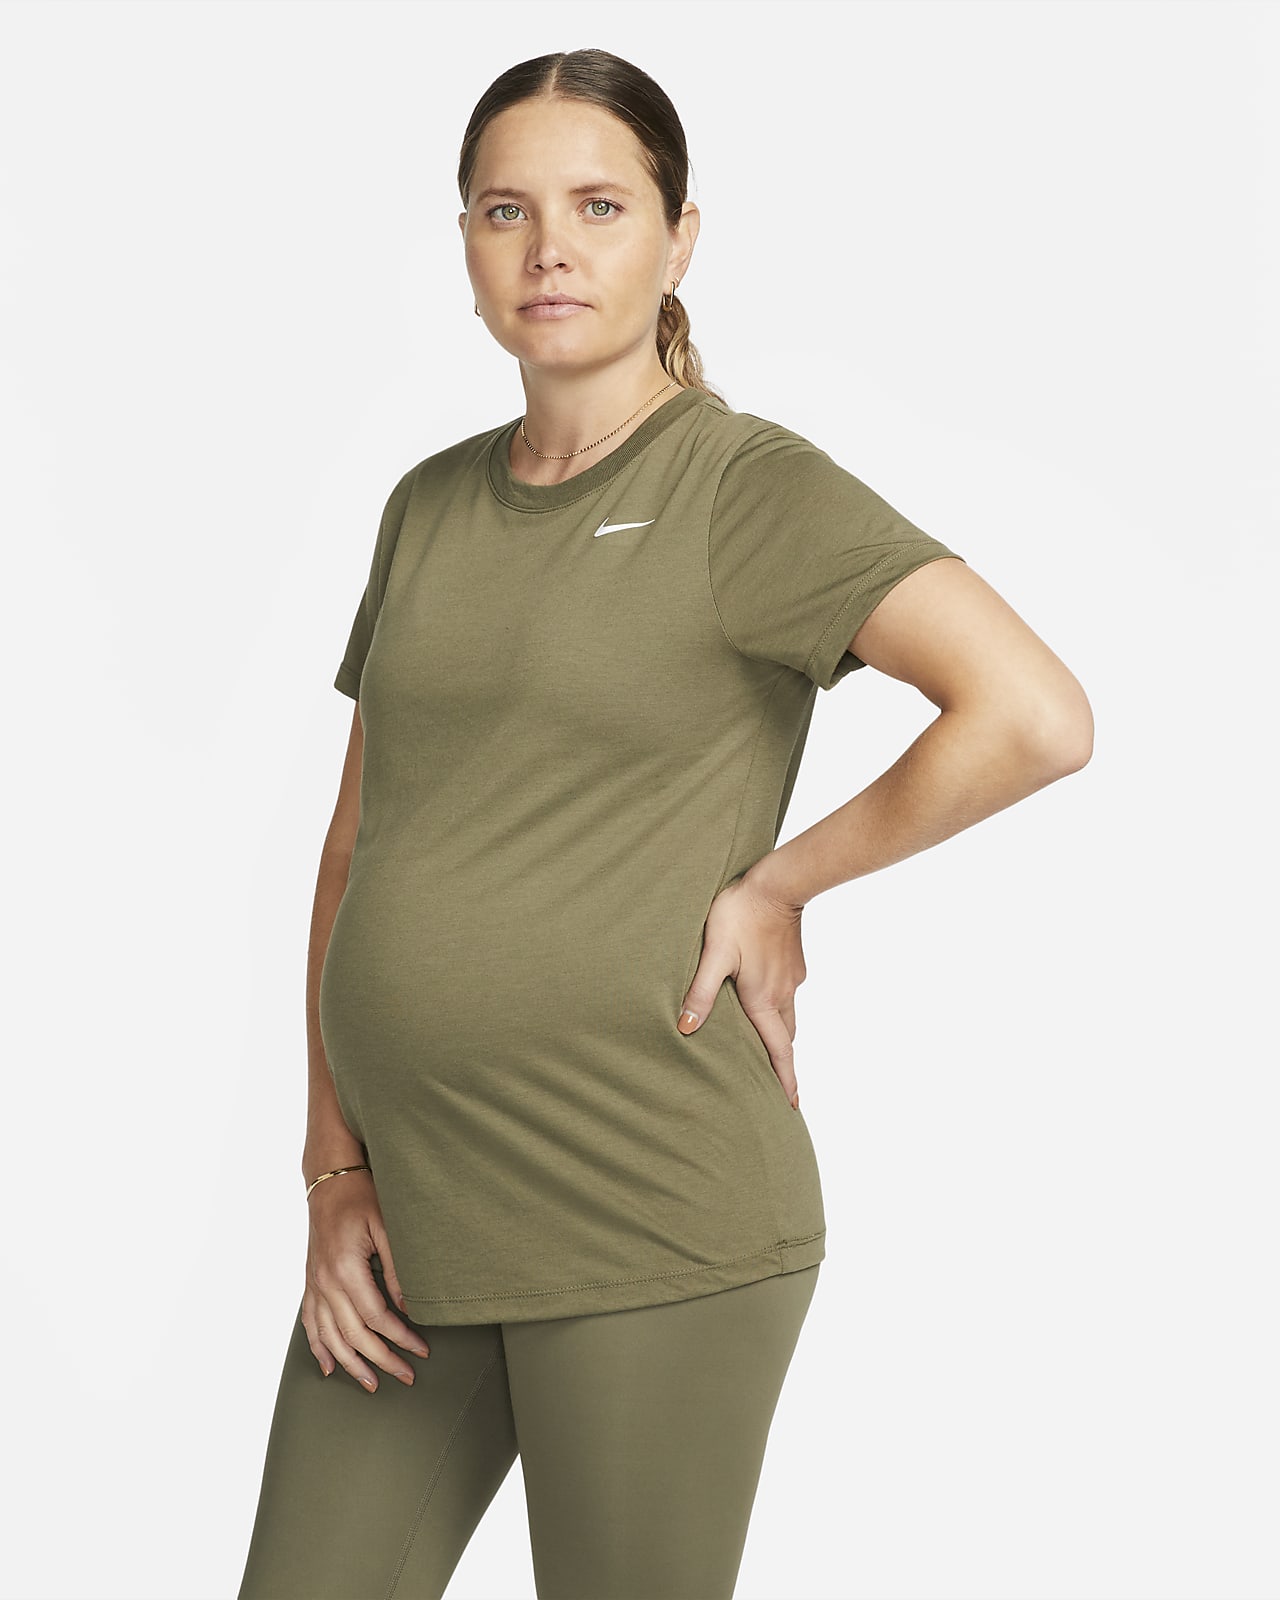 Playera para mujer (maternidad) Nike Dri-FIT (M)